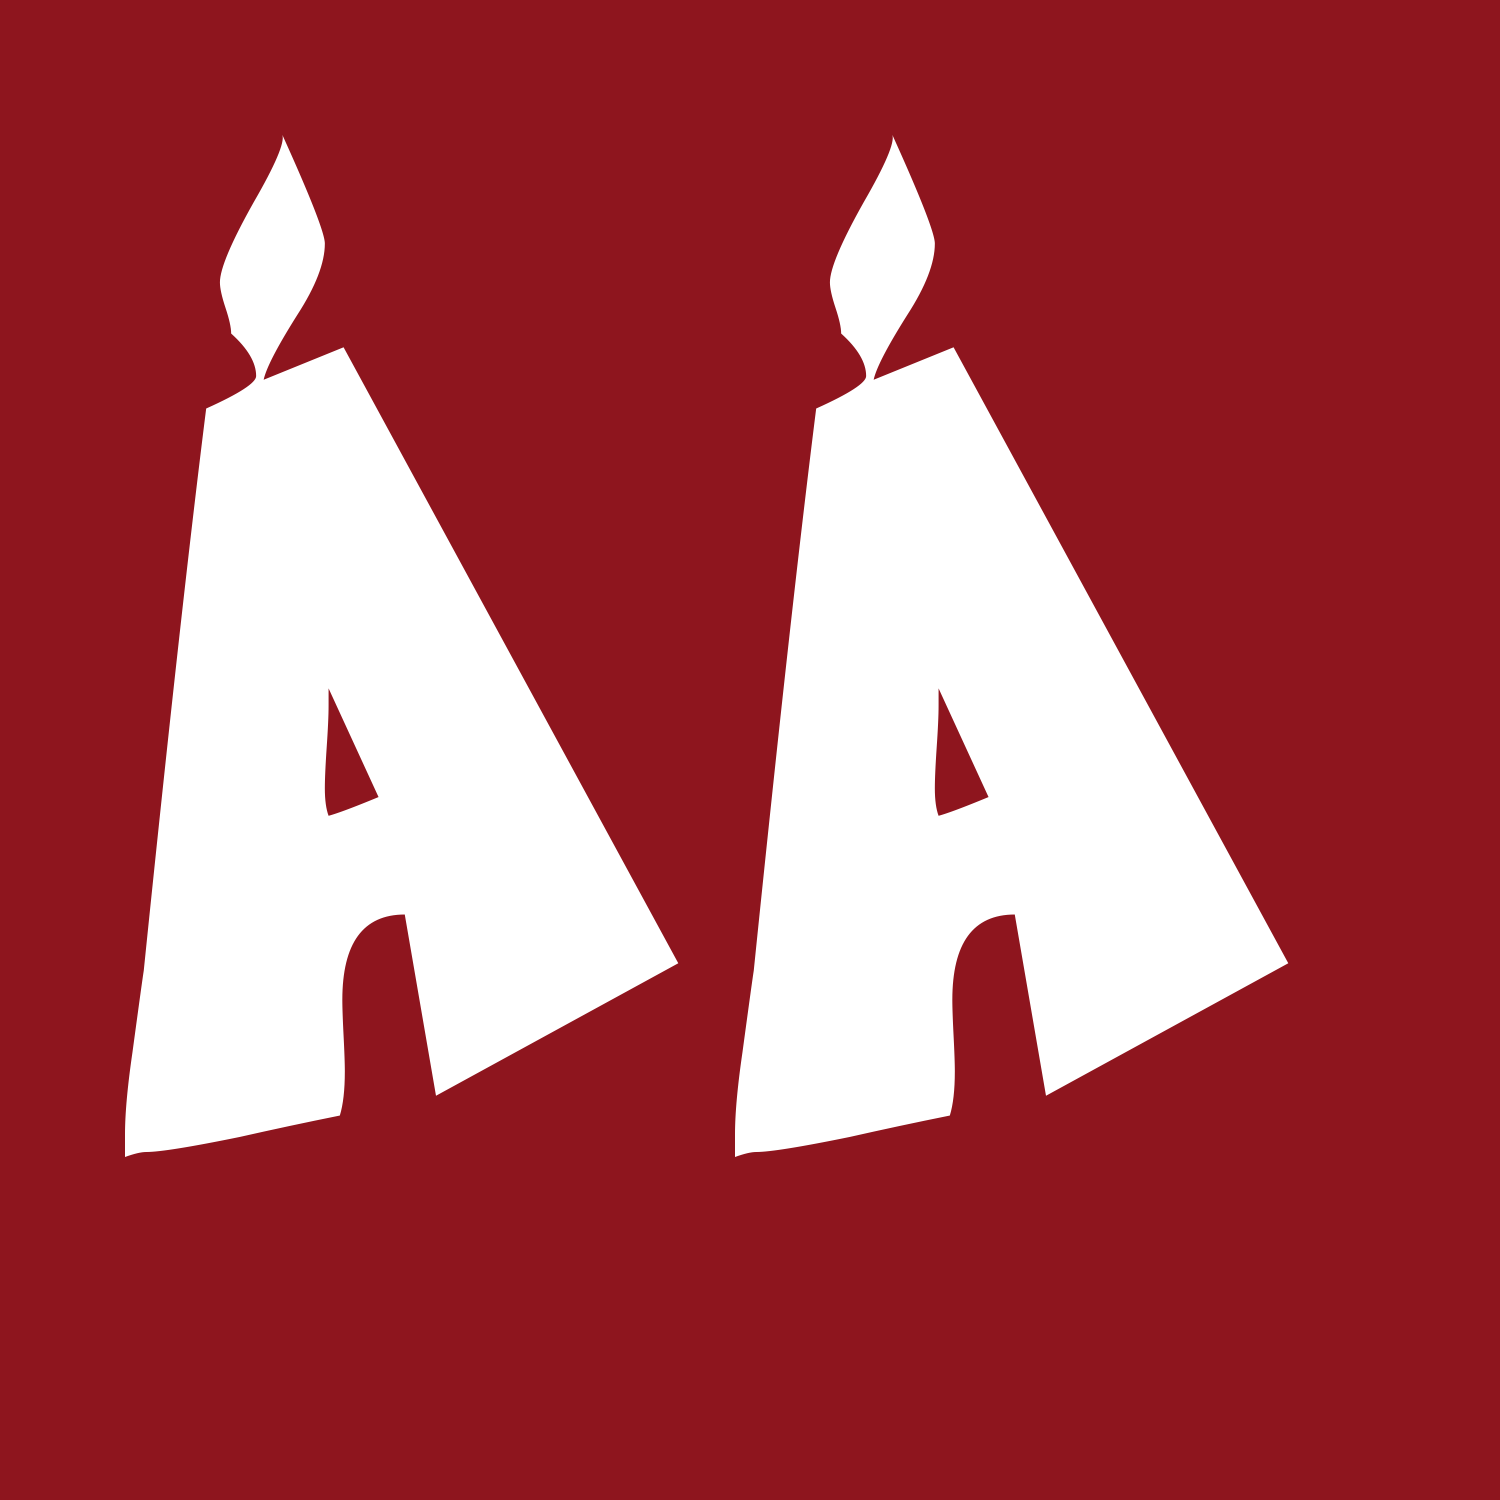 Happy Birthday Font